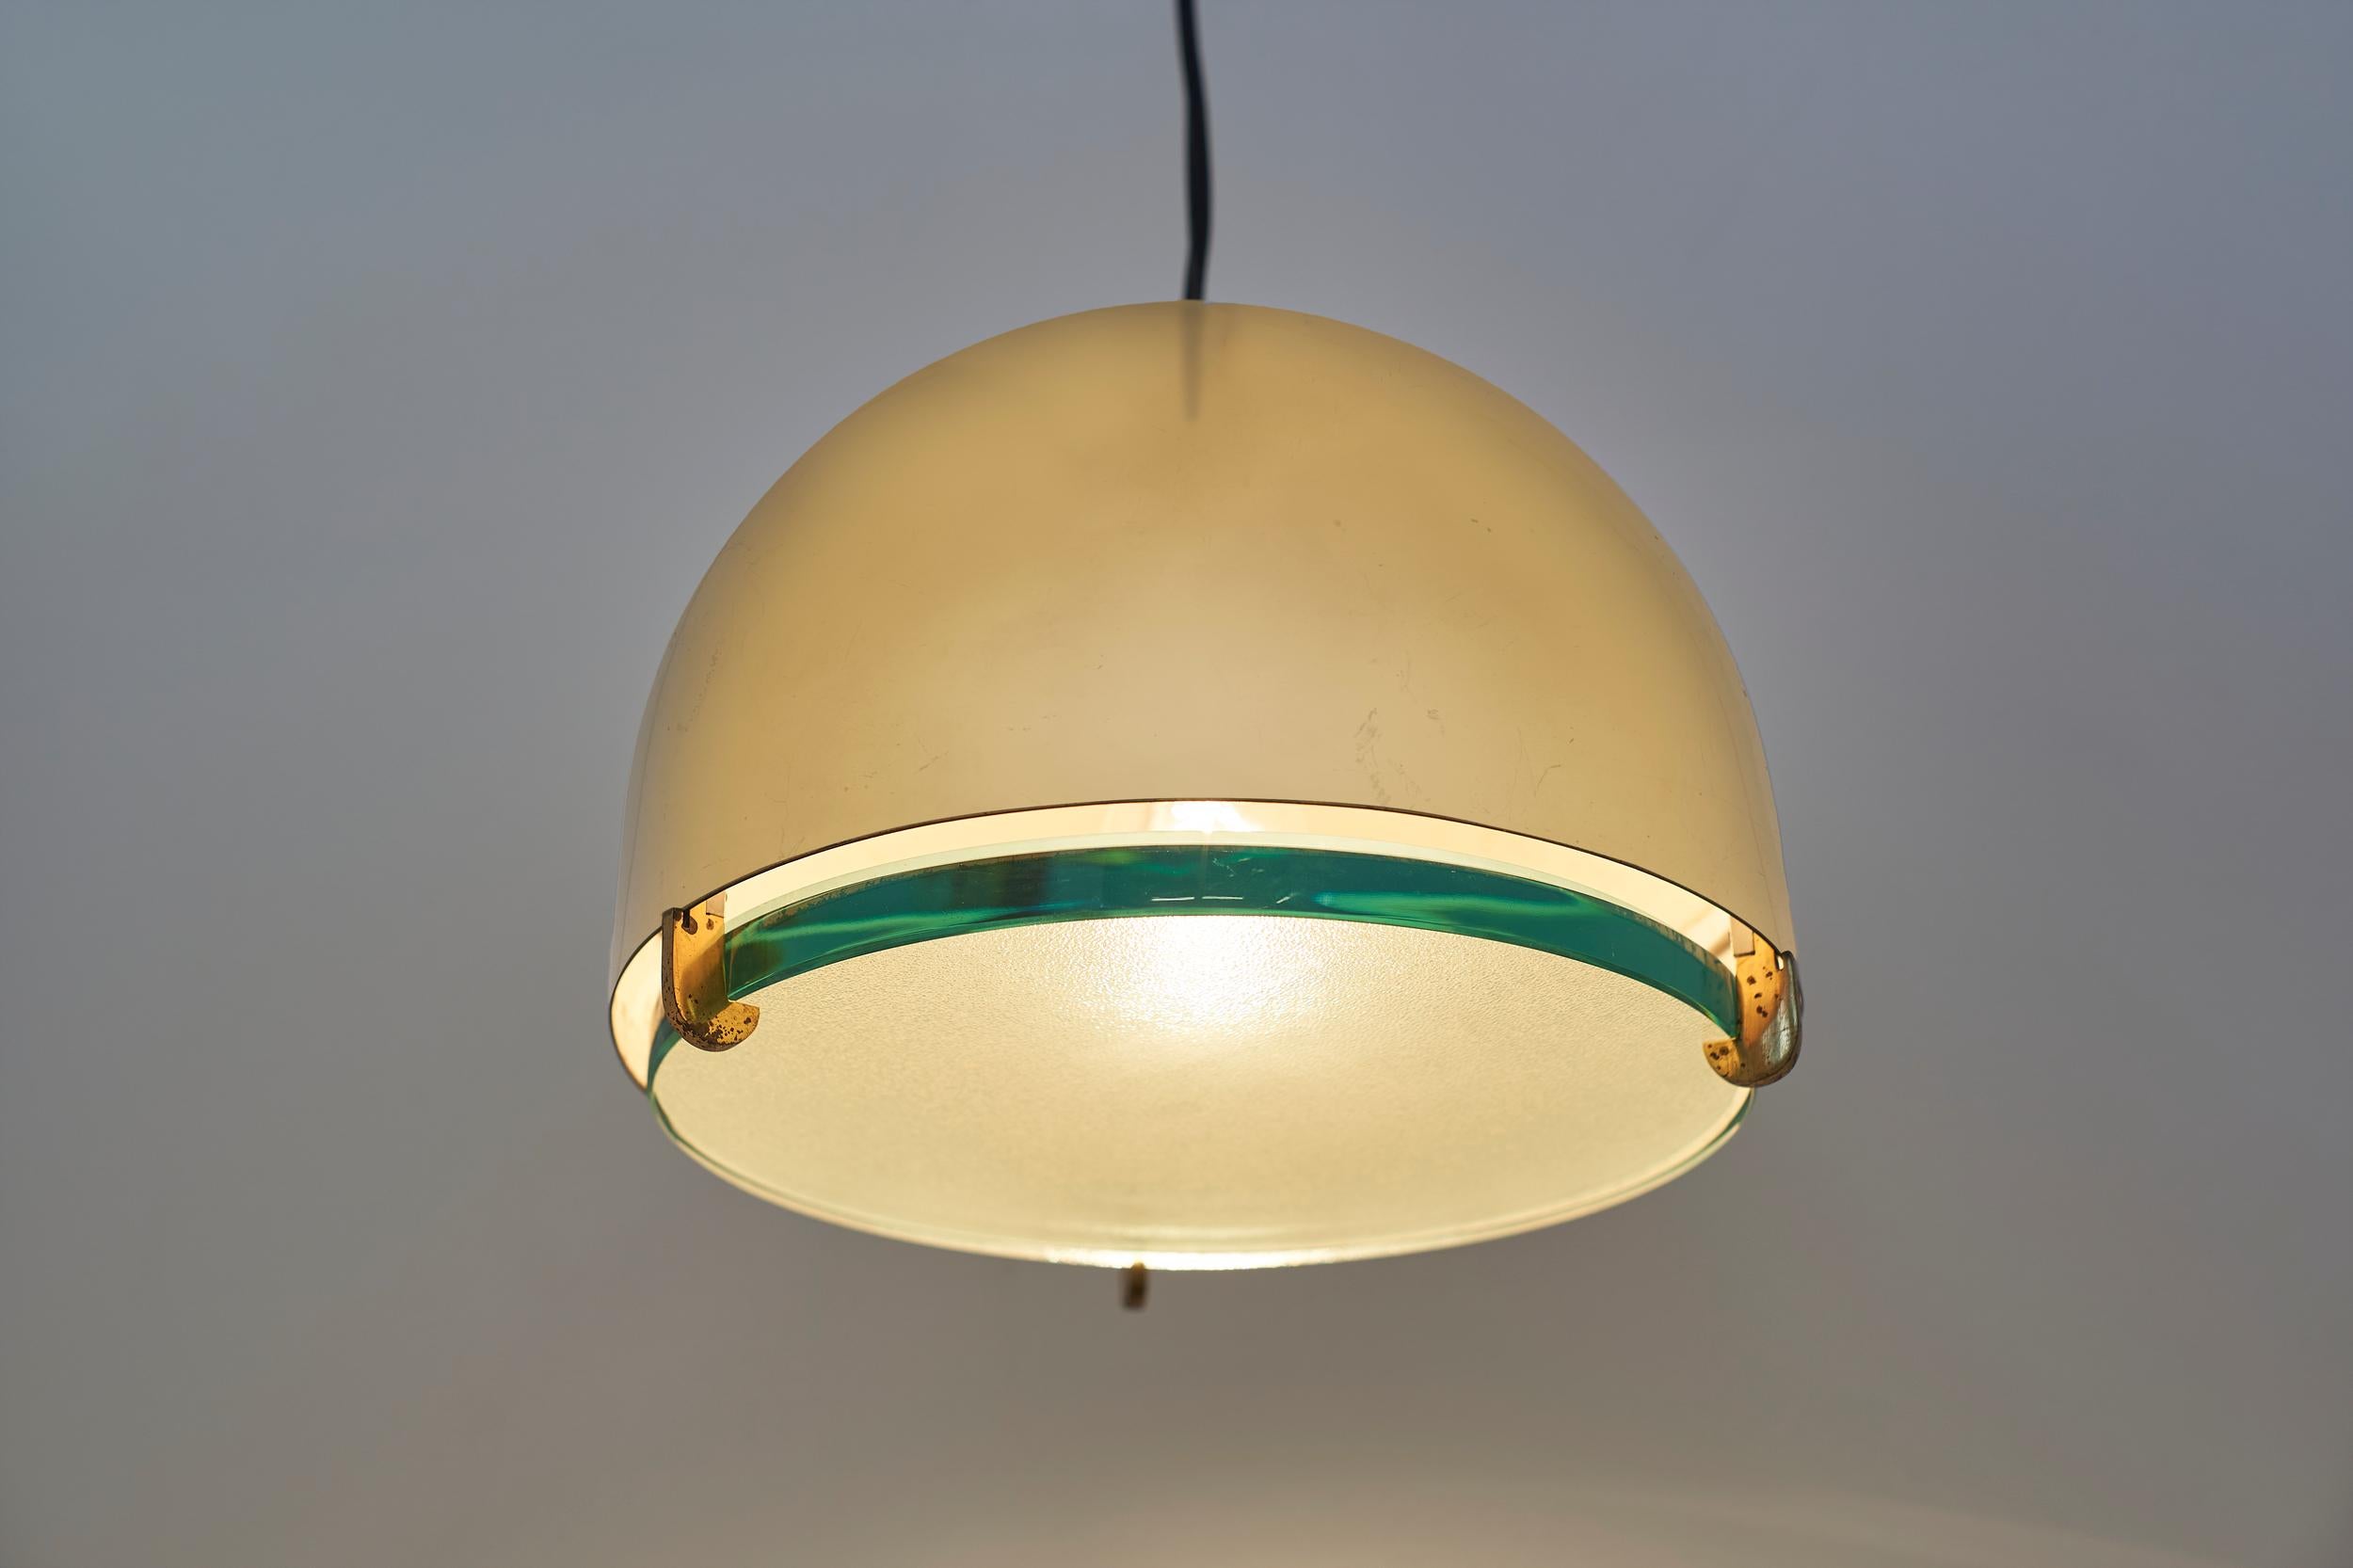 Molded Max Ingrand Ceiling Lamp by Fontana Arte Model N 2409, 1960 circa